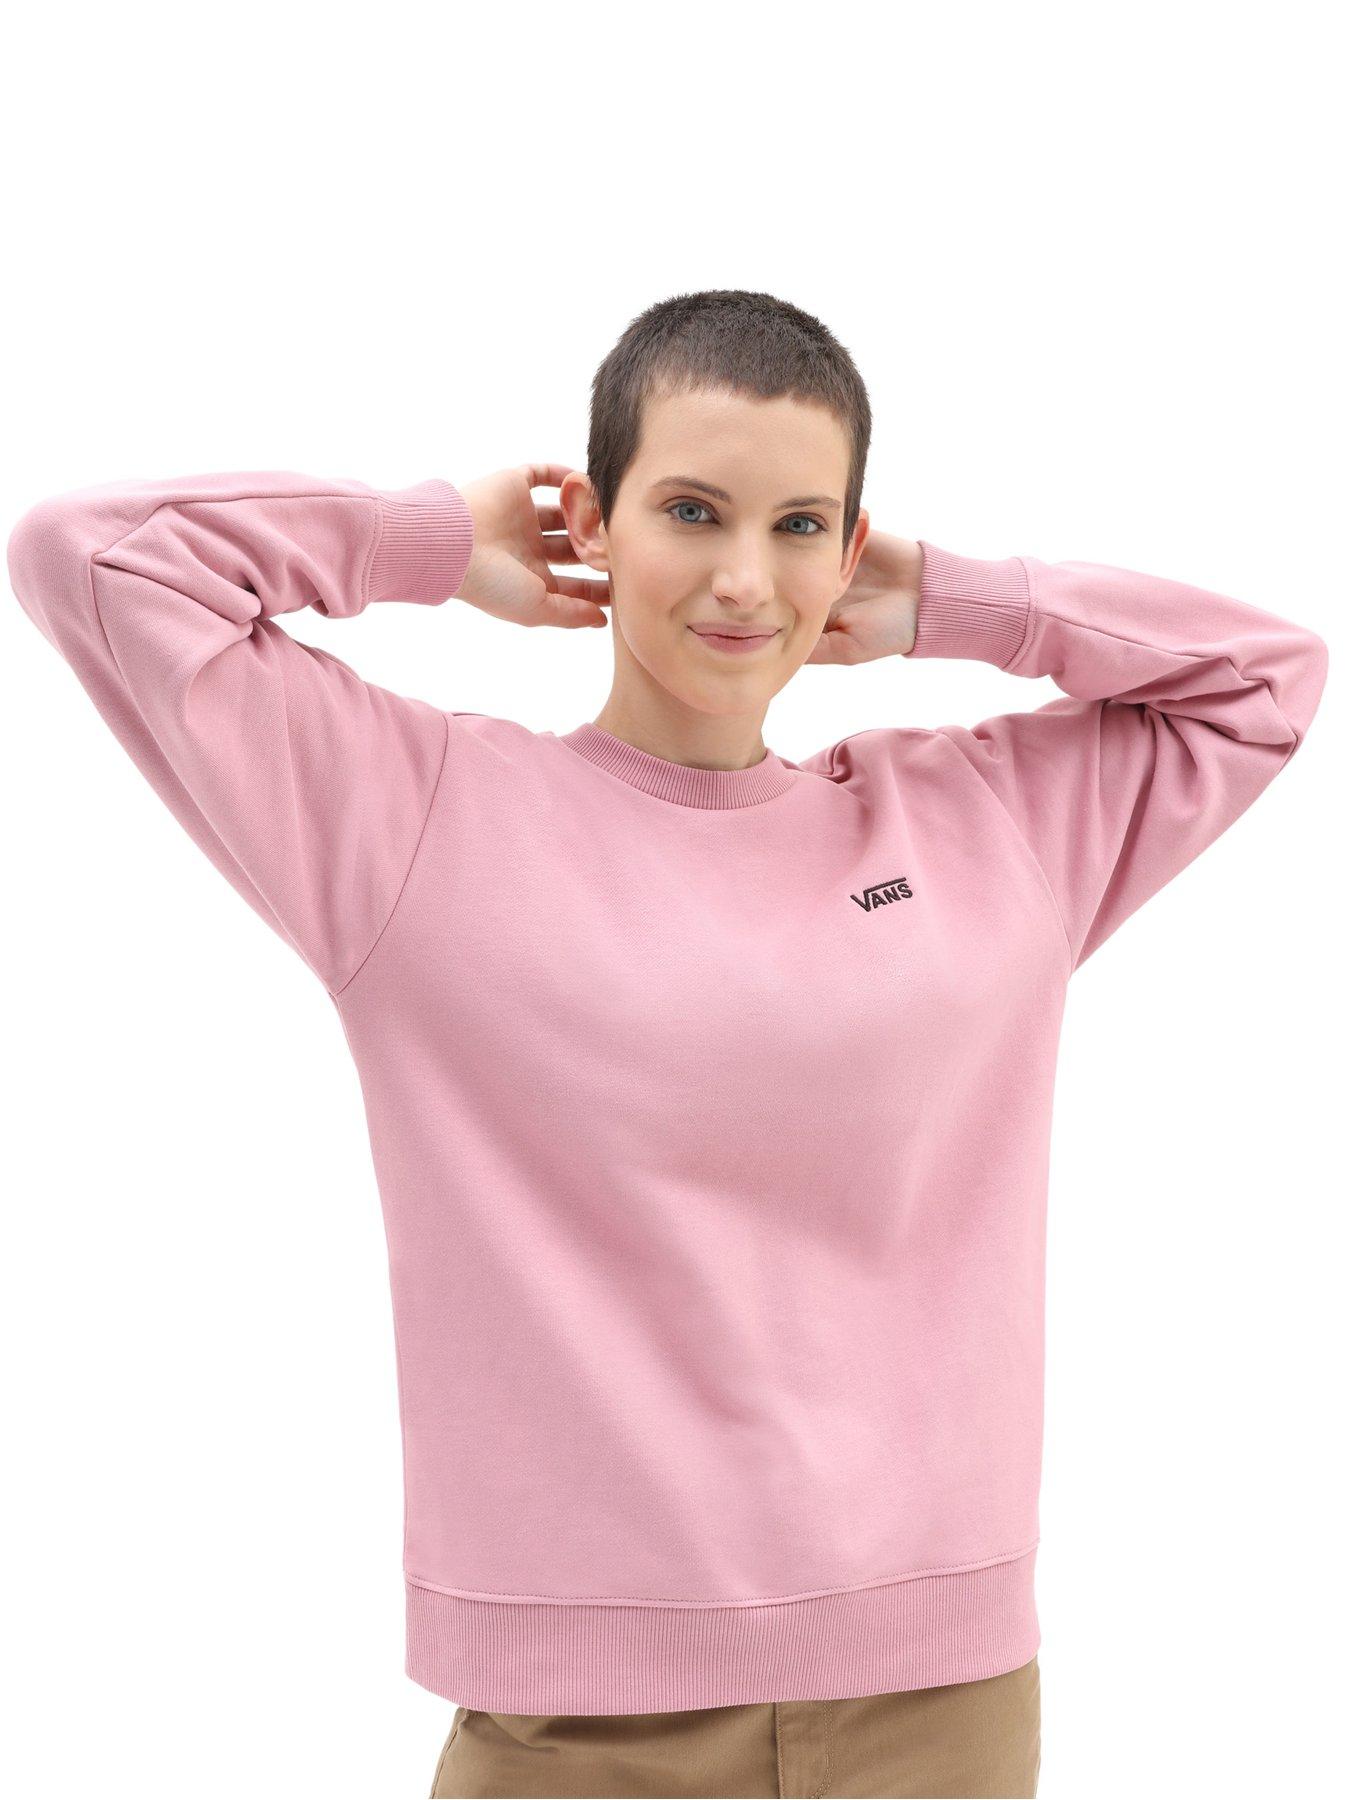 discount 94% Zara jumper Pink S WOMEN FASHION Jumpers & Sweatshirts Fur 